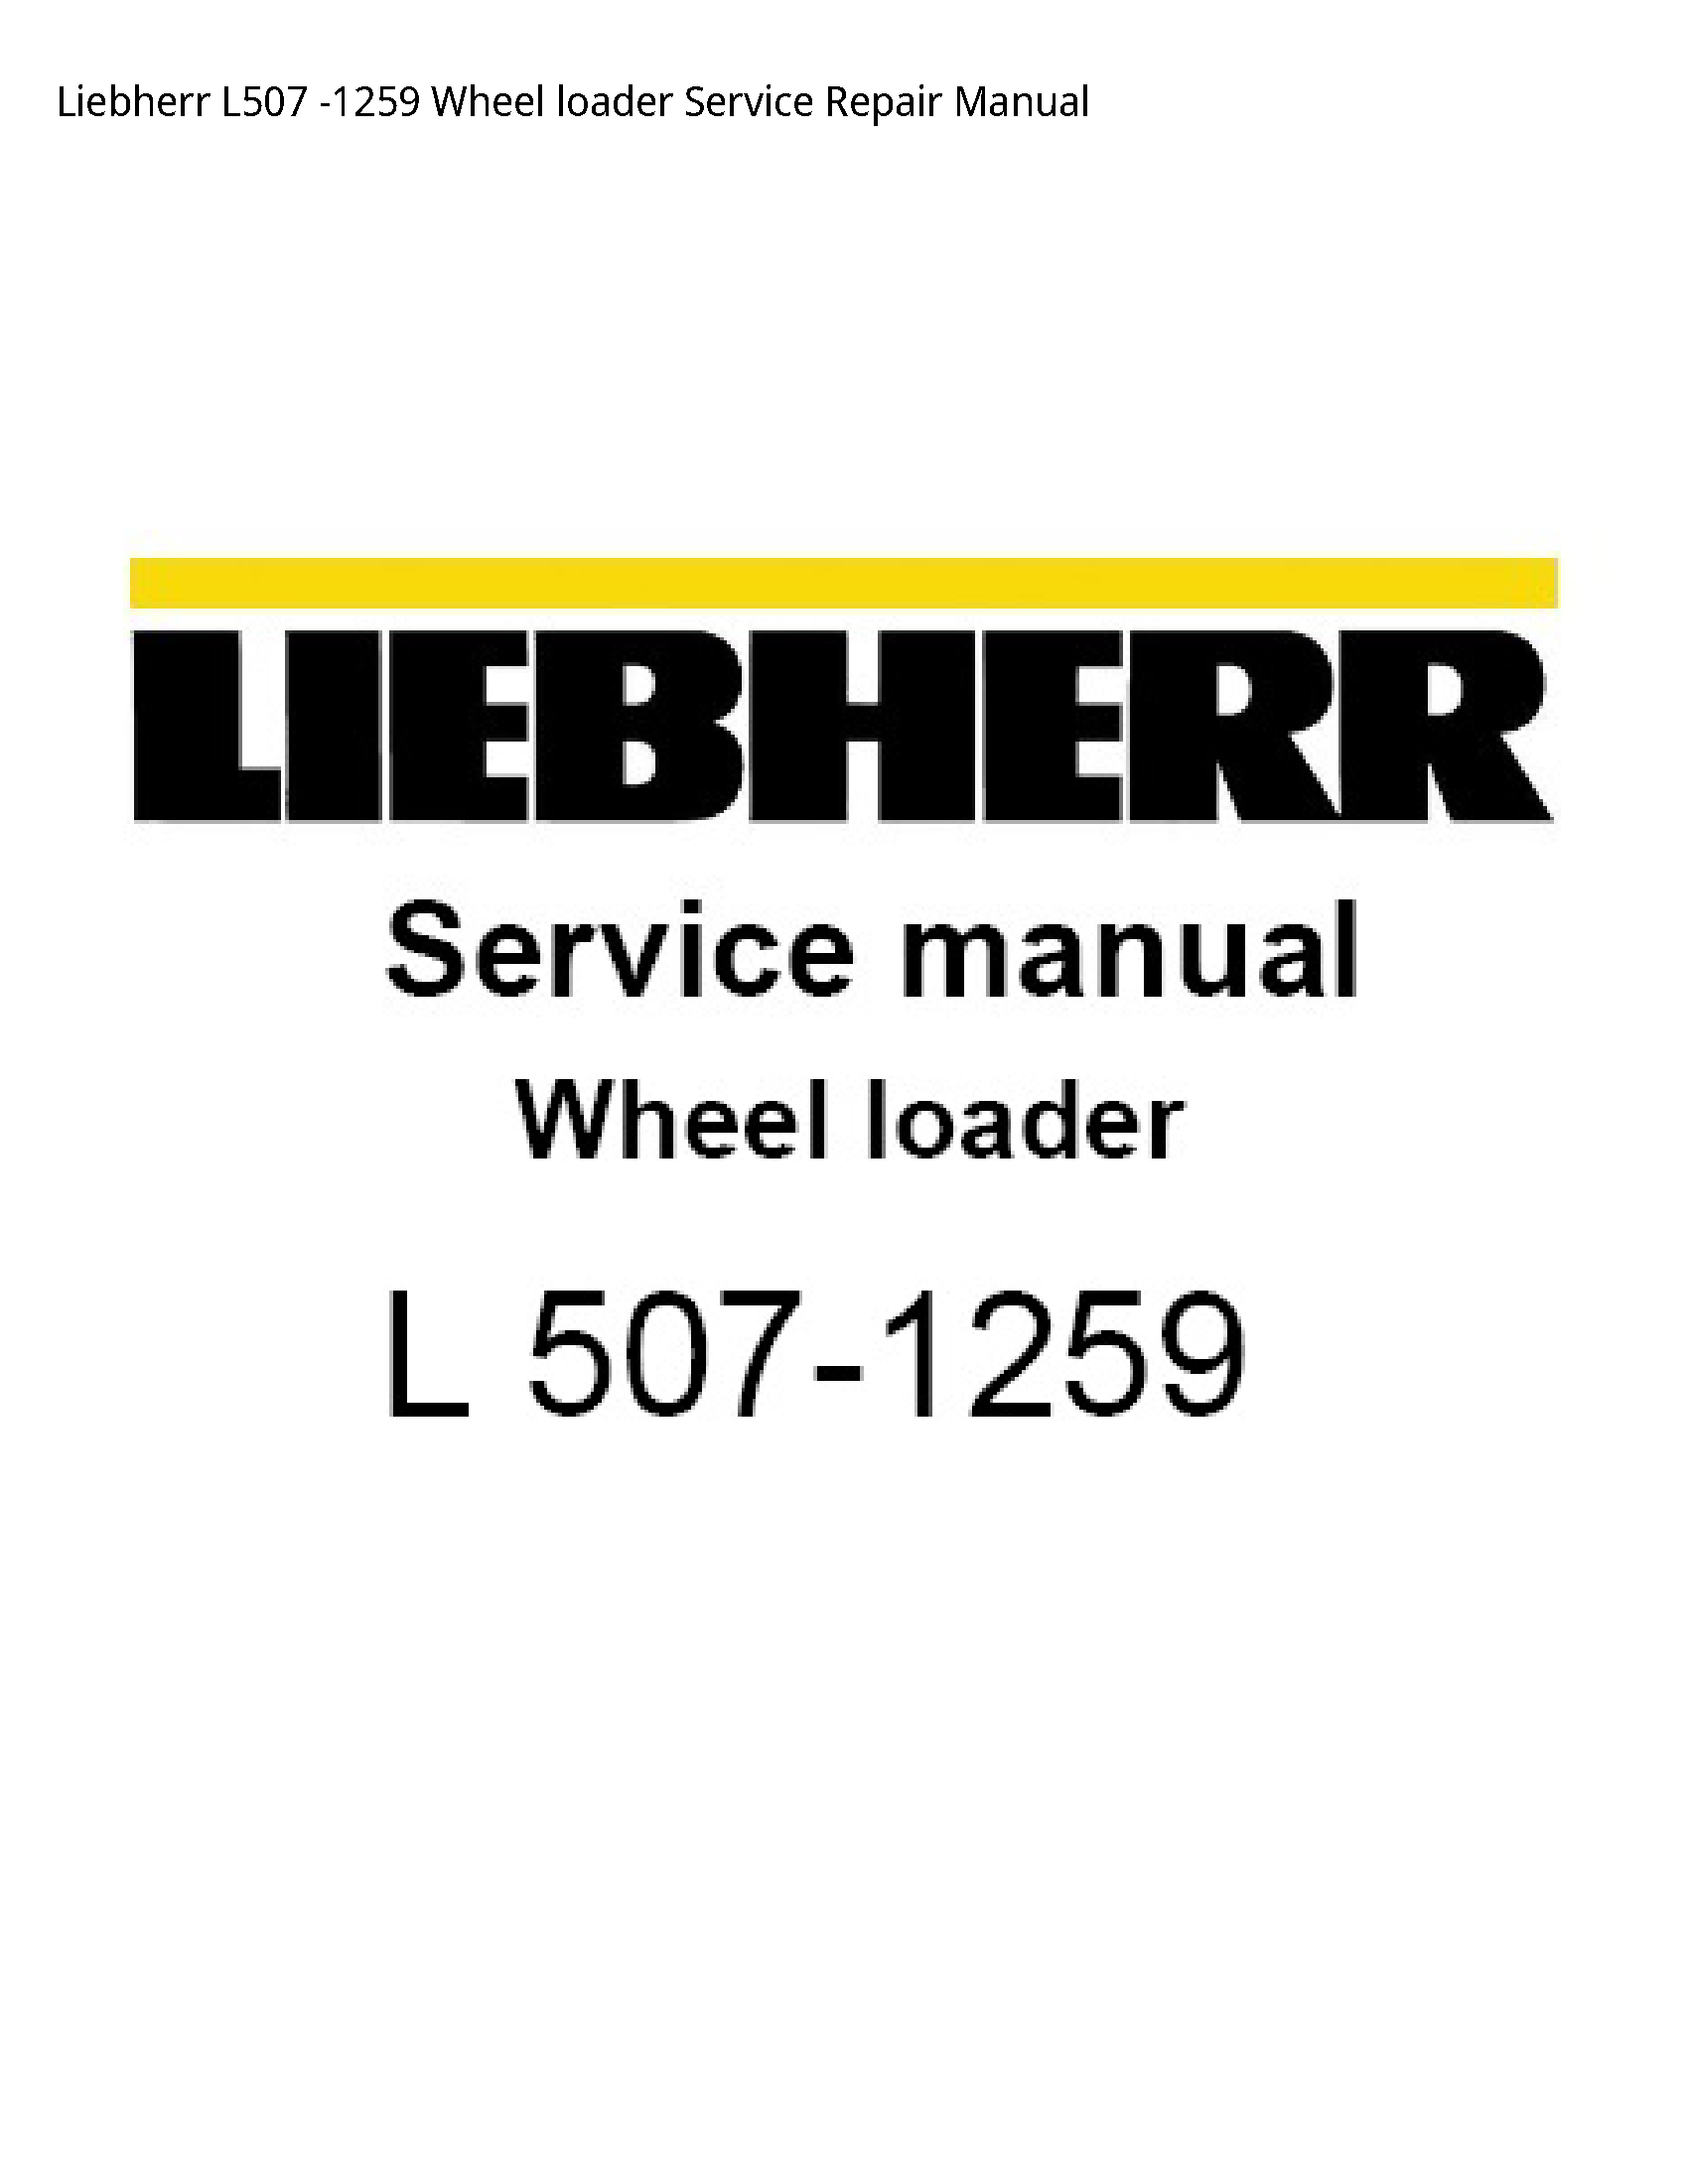 Liebherr L507 Wheel loader manual